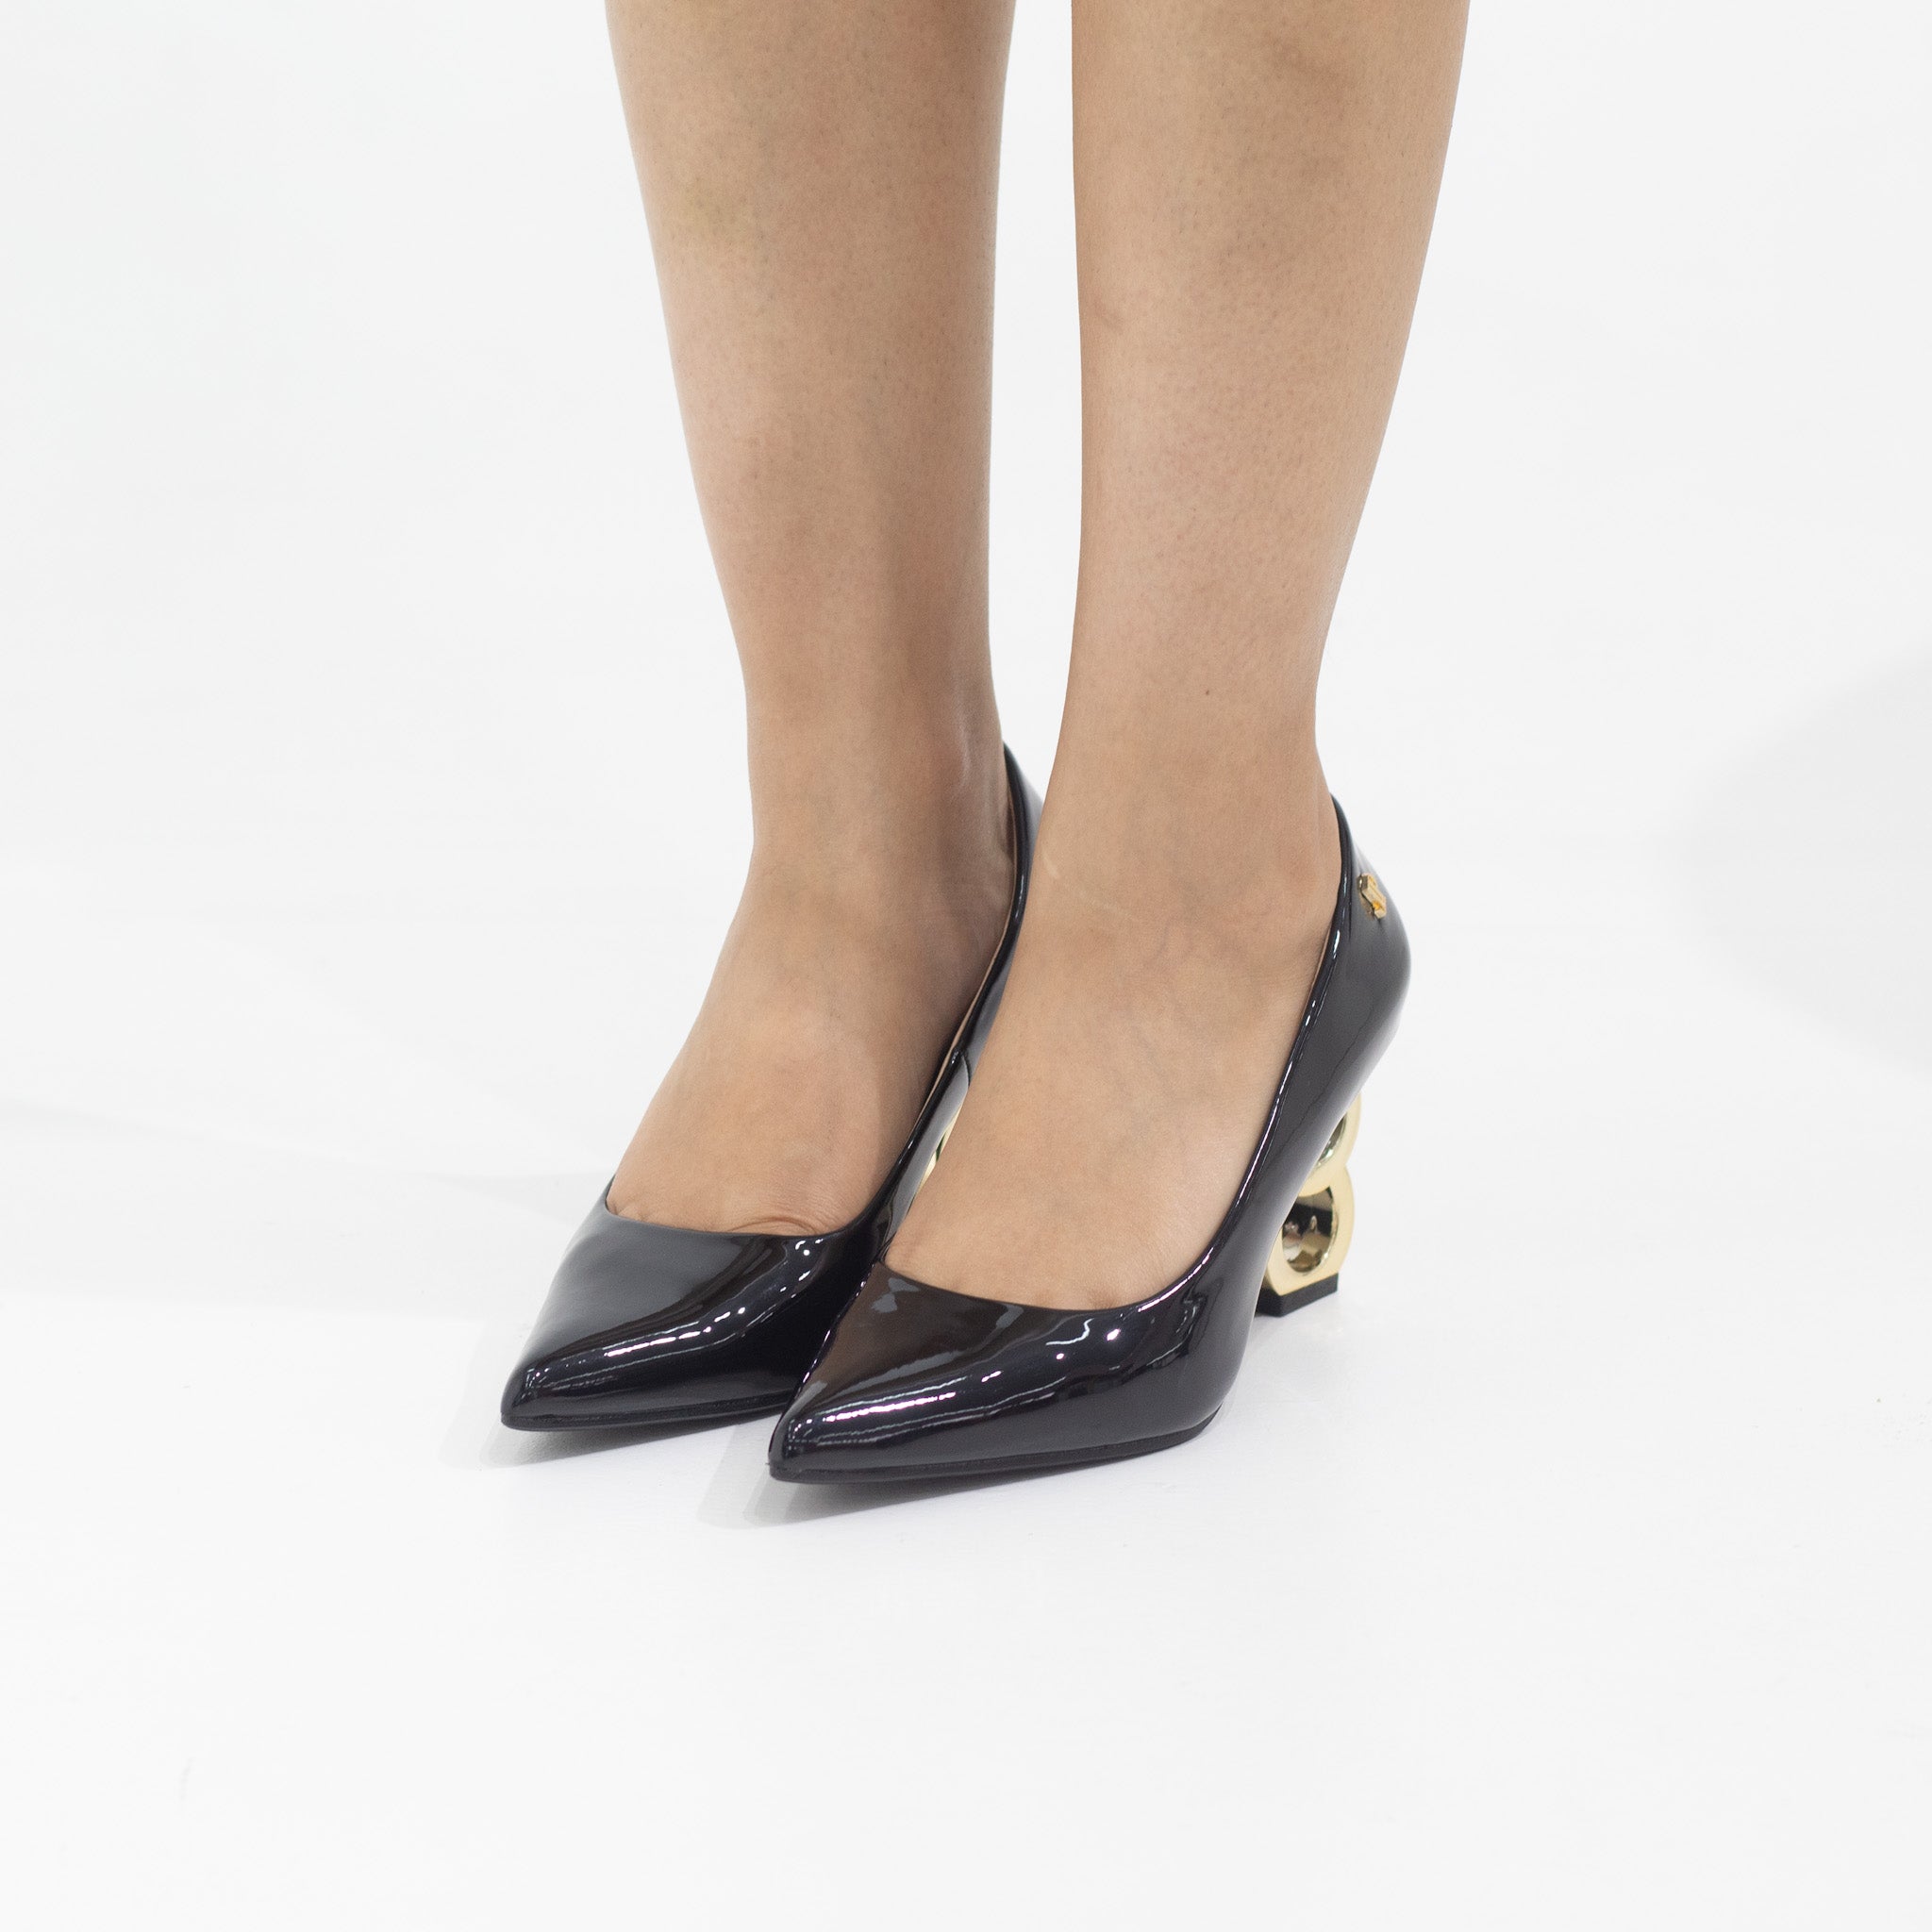 Black heels with gold circle heel